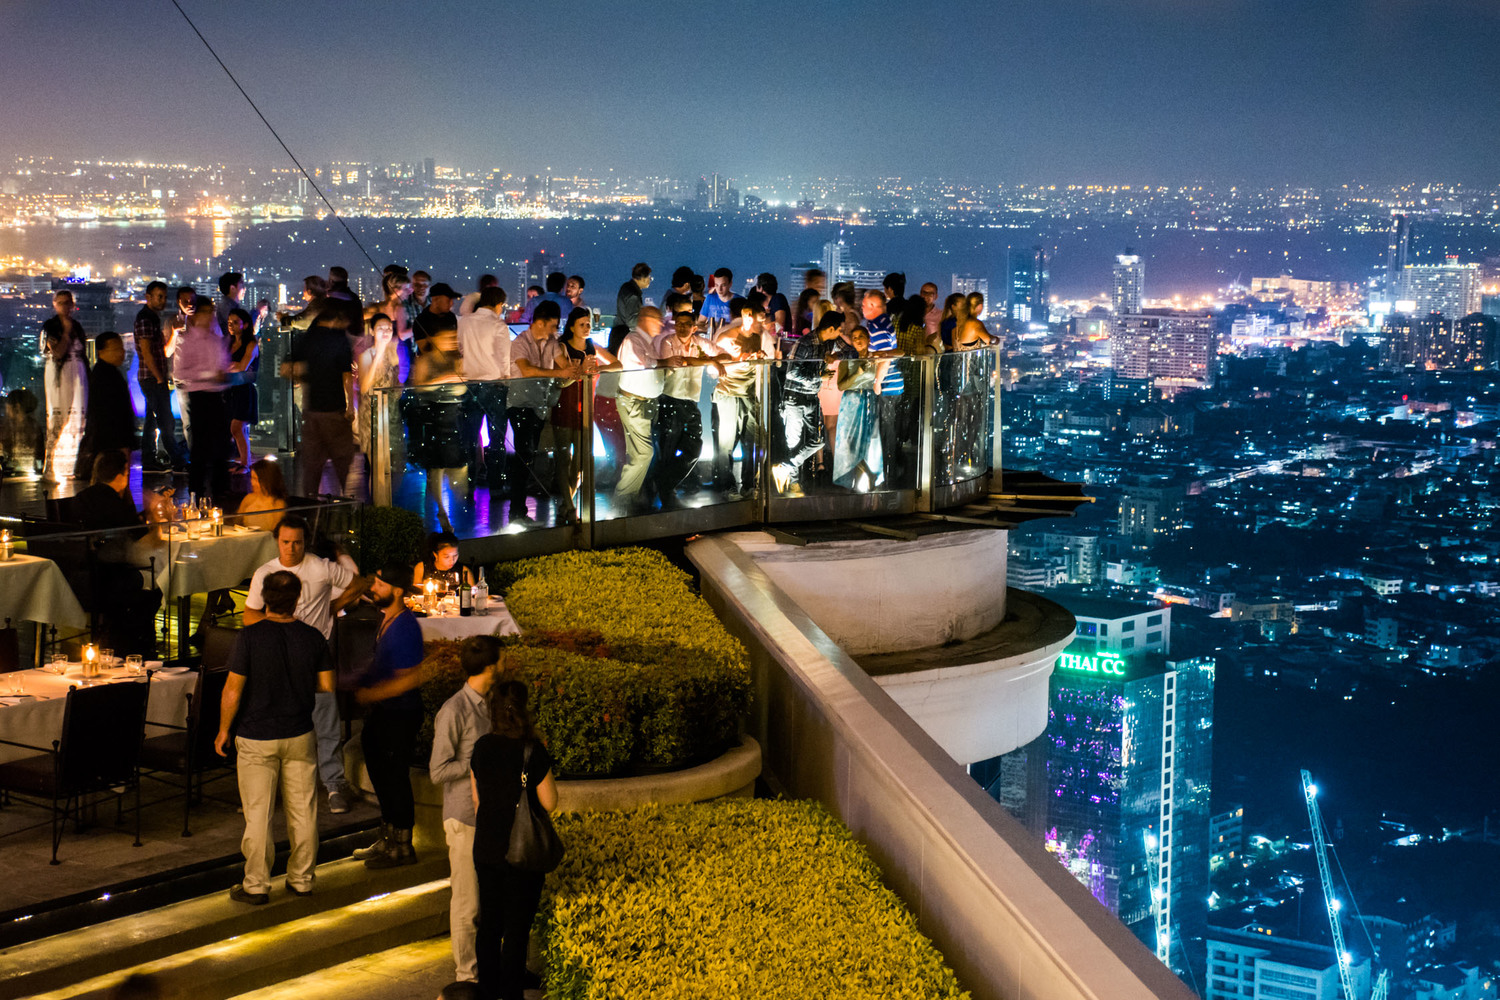 41 HQ Images Top Ten Rooftop Bars Bangkok : Mahanakhon Skywalk The Highest Rooftop In Bangkok By Phuket 101